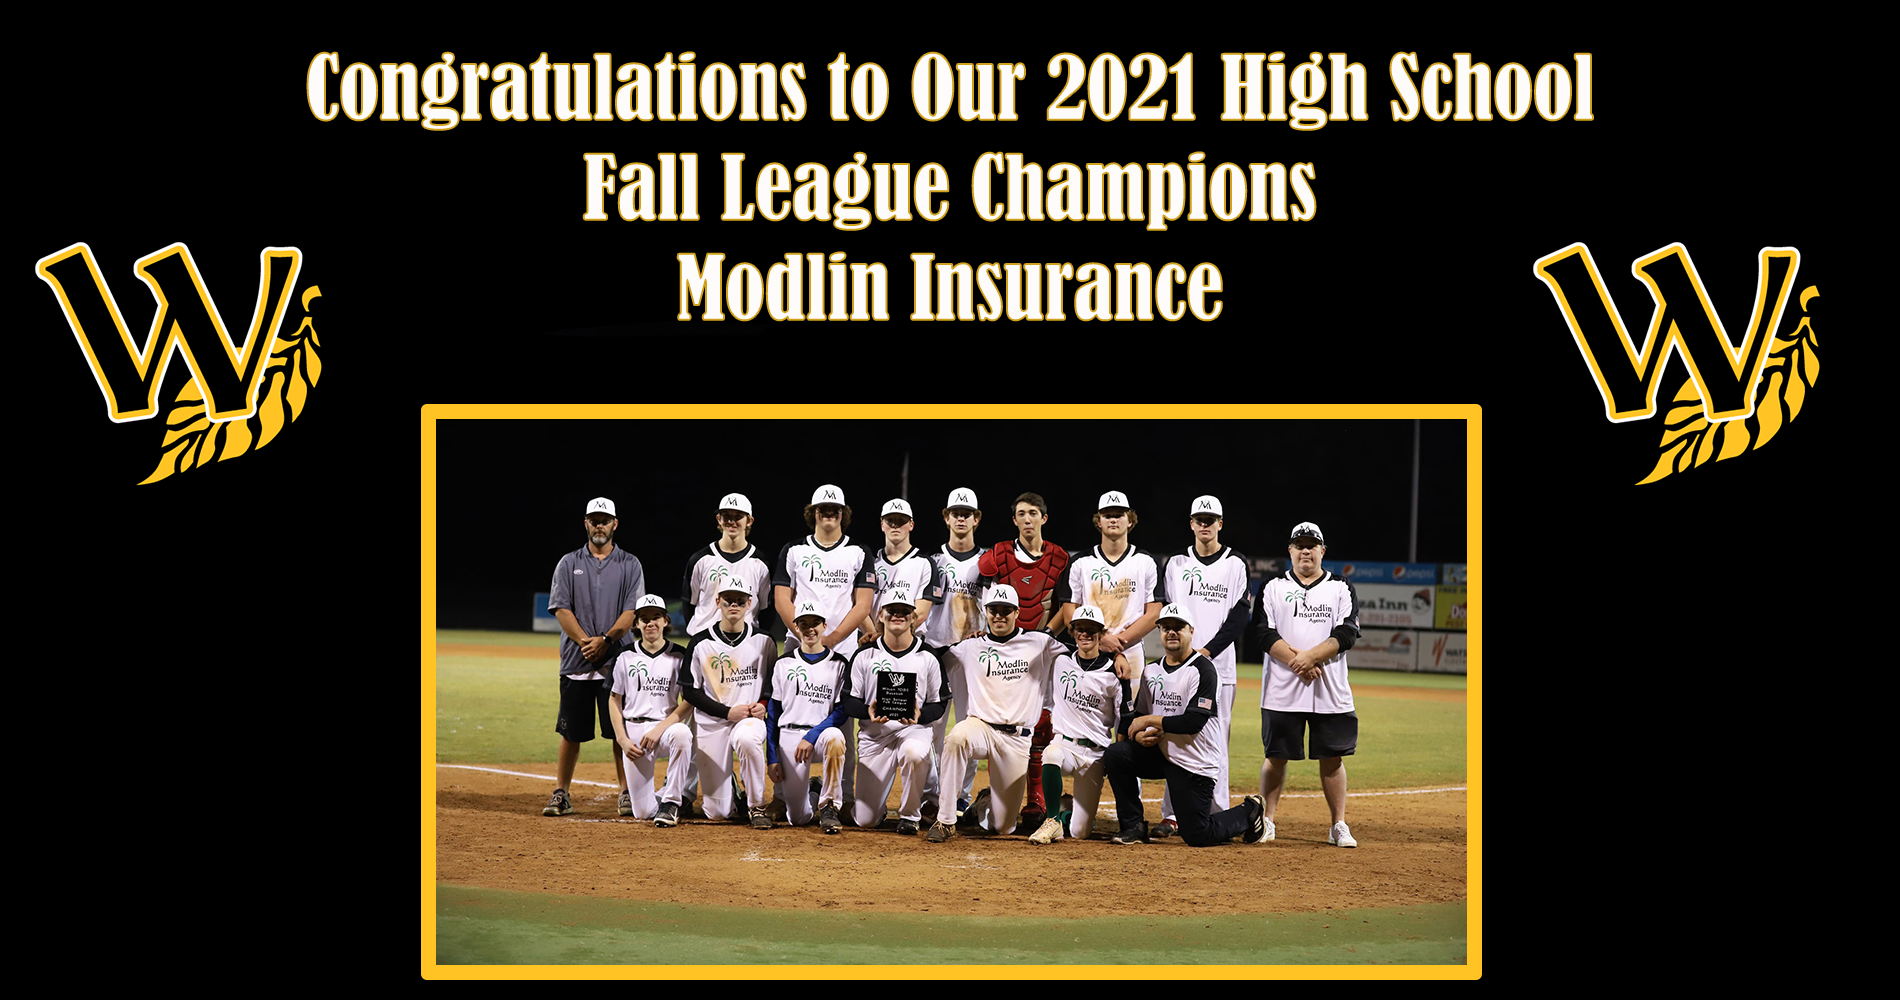 Modlin Insurance Wins Fall League Championship!